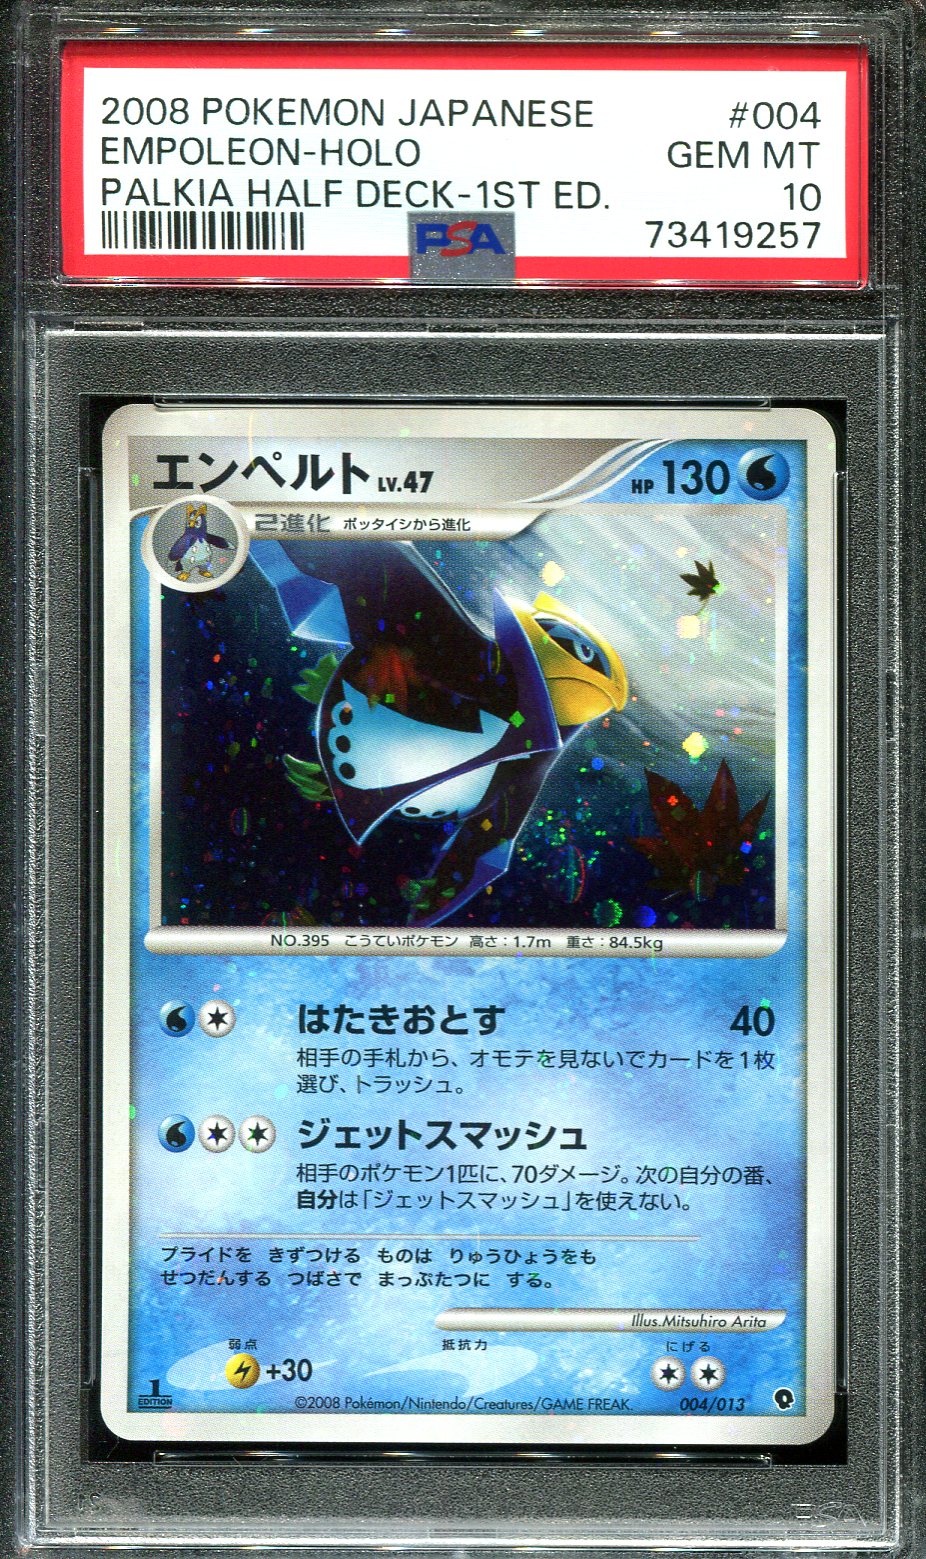 PSA 10 Pokemon Card Palkia LV.X 105/DP-P Holo Japanese Special